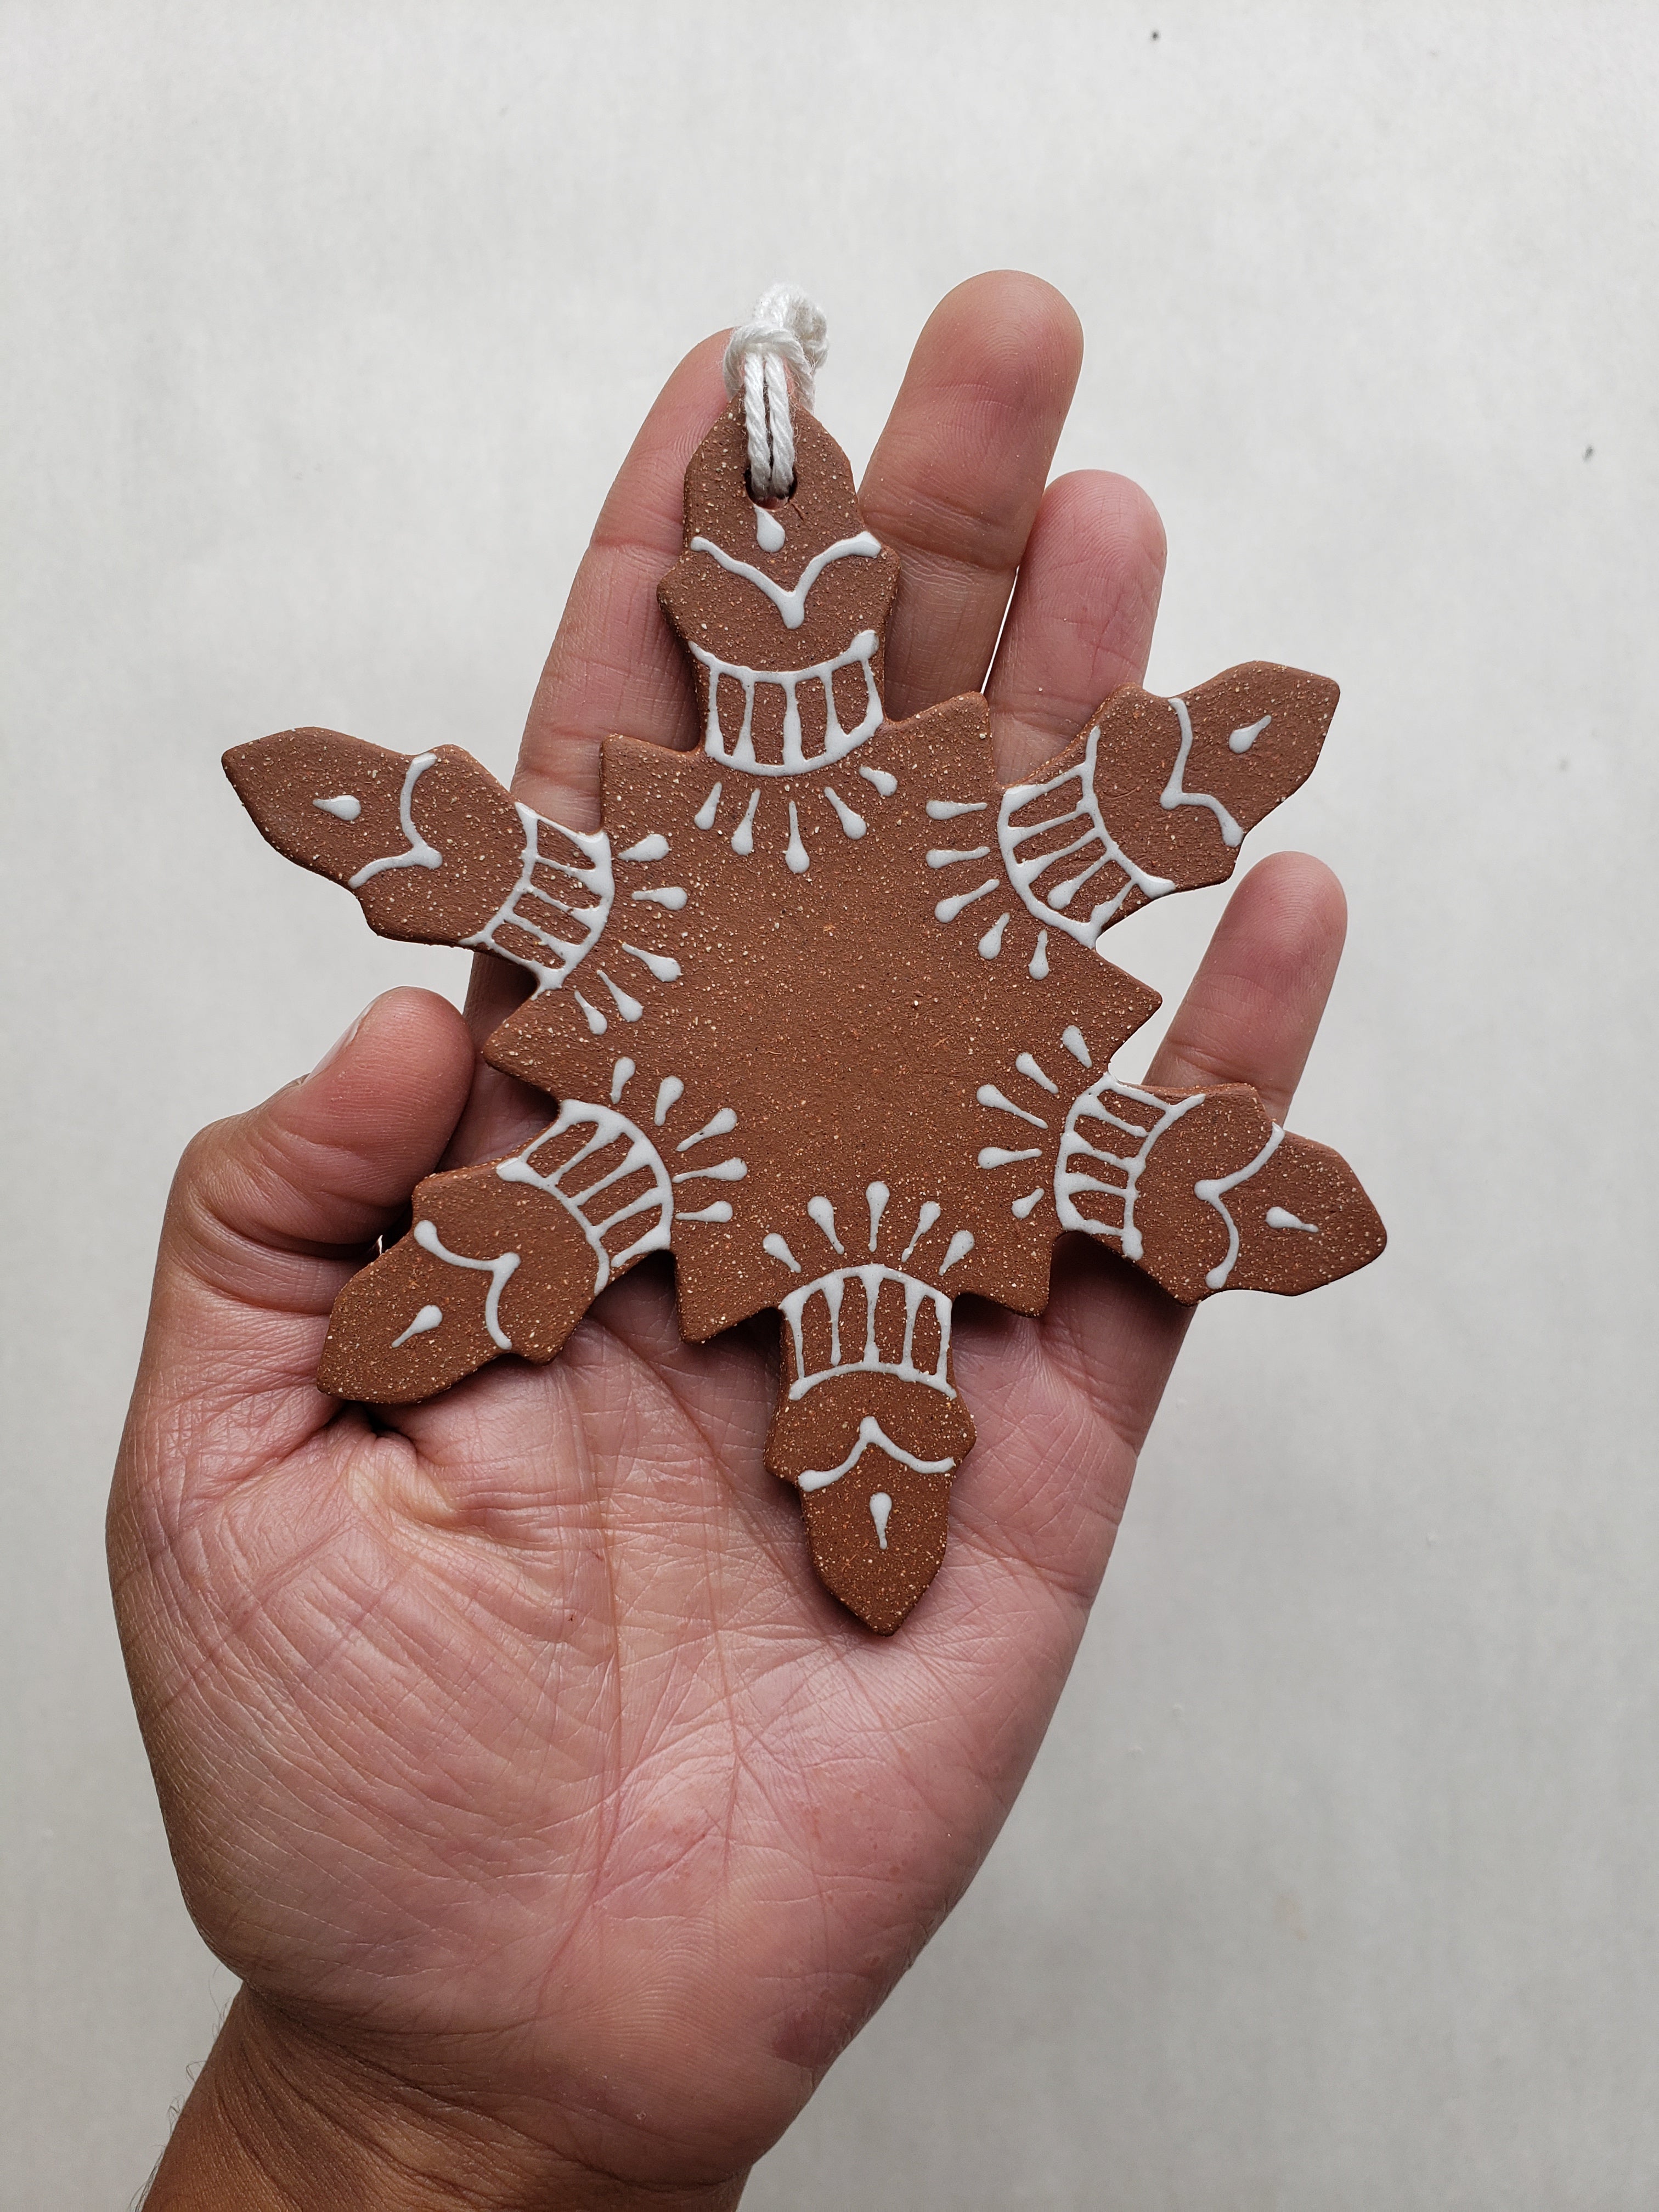 Ornament - Snowflake